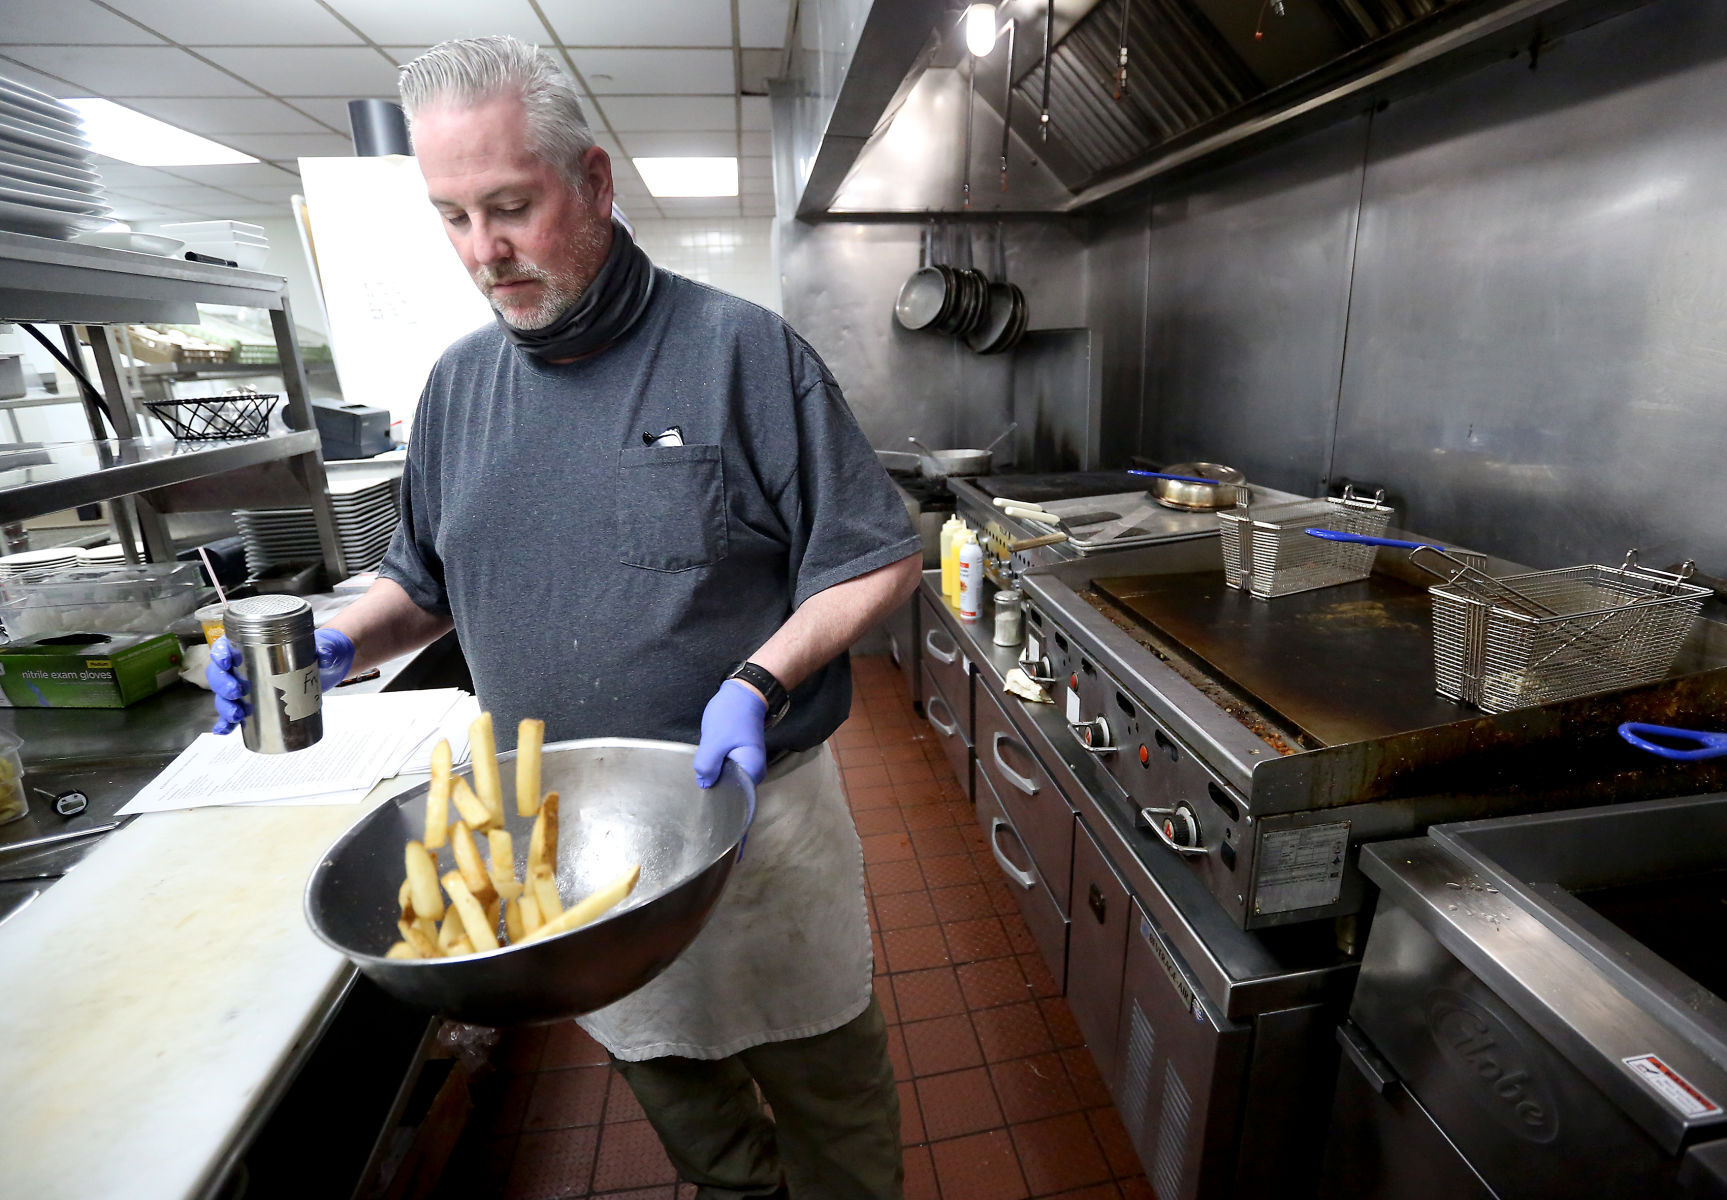 Michael Pratte salts fries while preparing practice meals for Bennigan